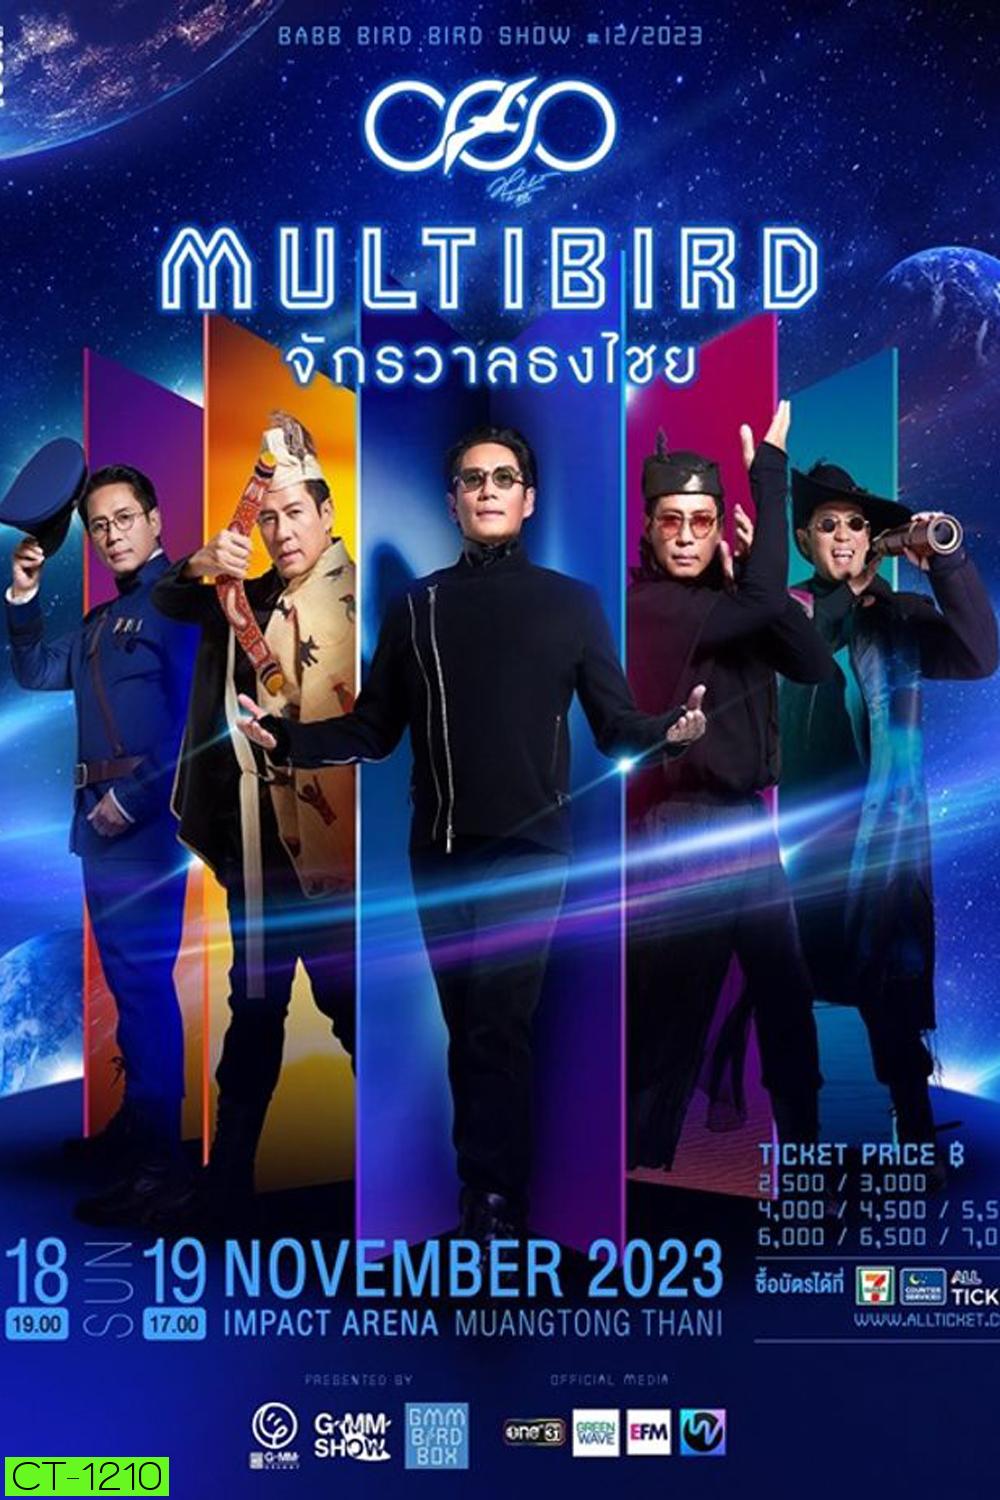 Bird Bird Show 12th MULTIBIRD Thongchai Universe แบบเบิร์ดเบิร์ดโชว์ ครั้งที่ 12 ตอน MULTIBIRD จักรวาลธงไชย (2023)